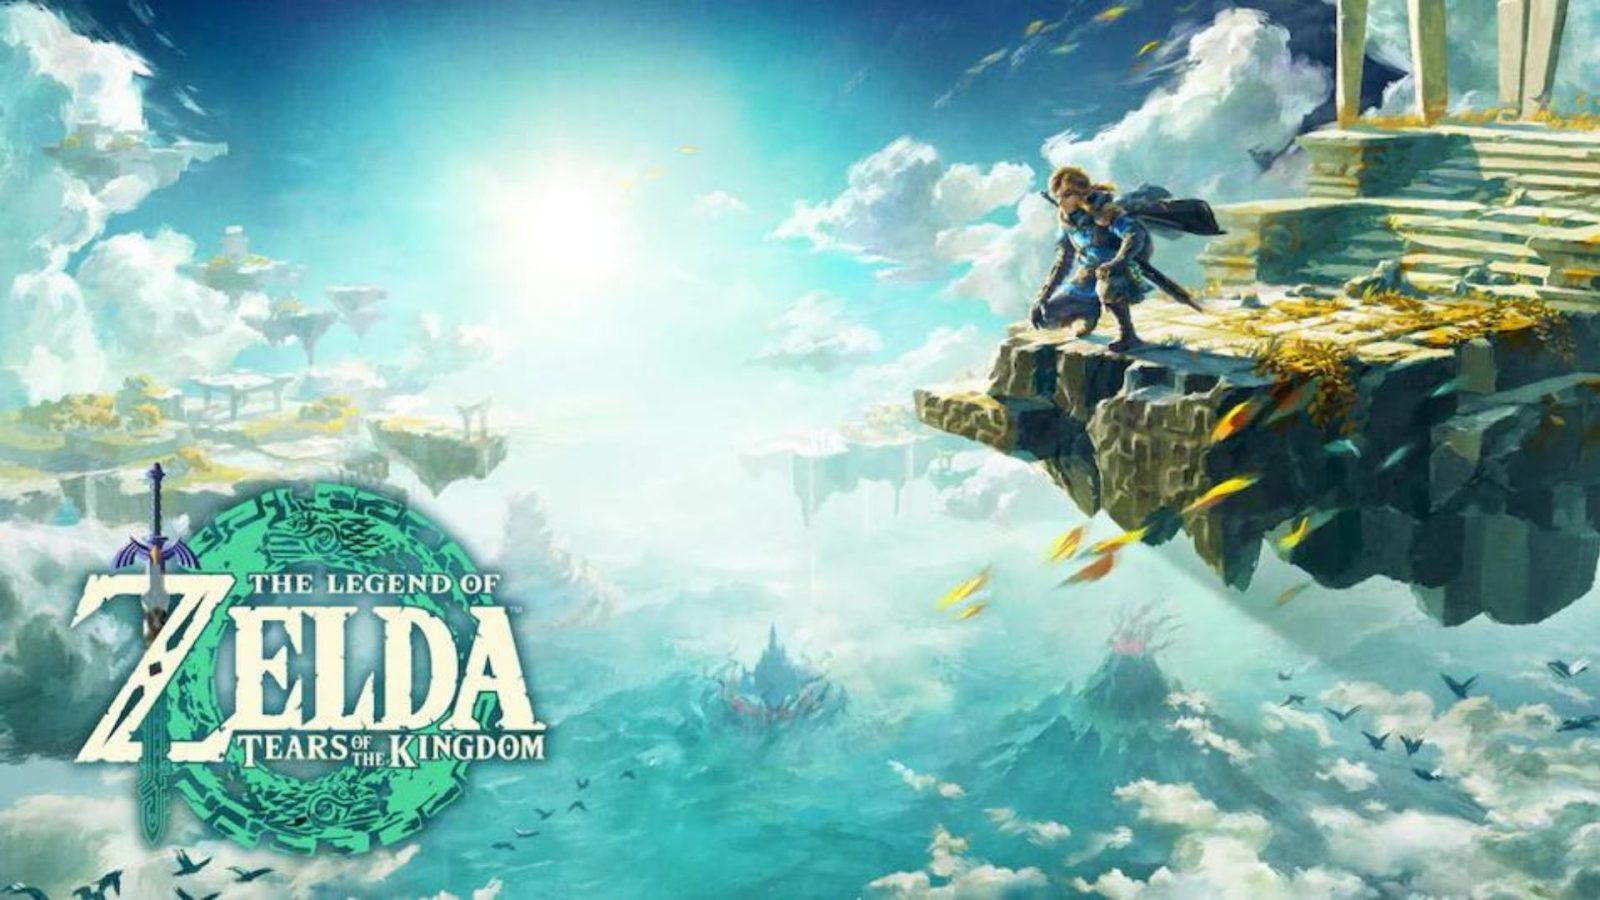 The Legend of Zelda: Breath of the Wild (Video Game 2017) - IMDb